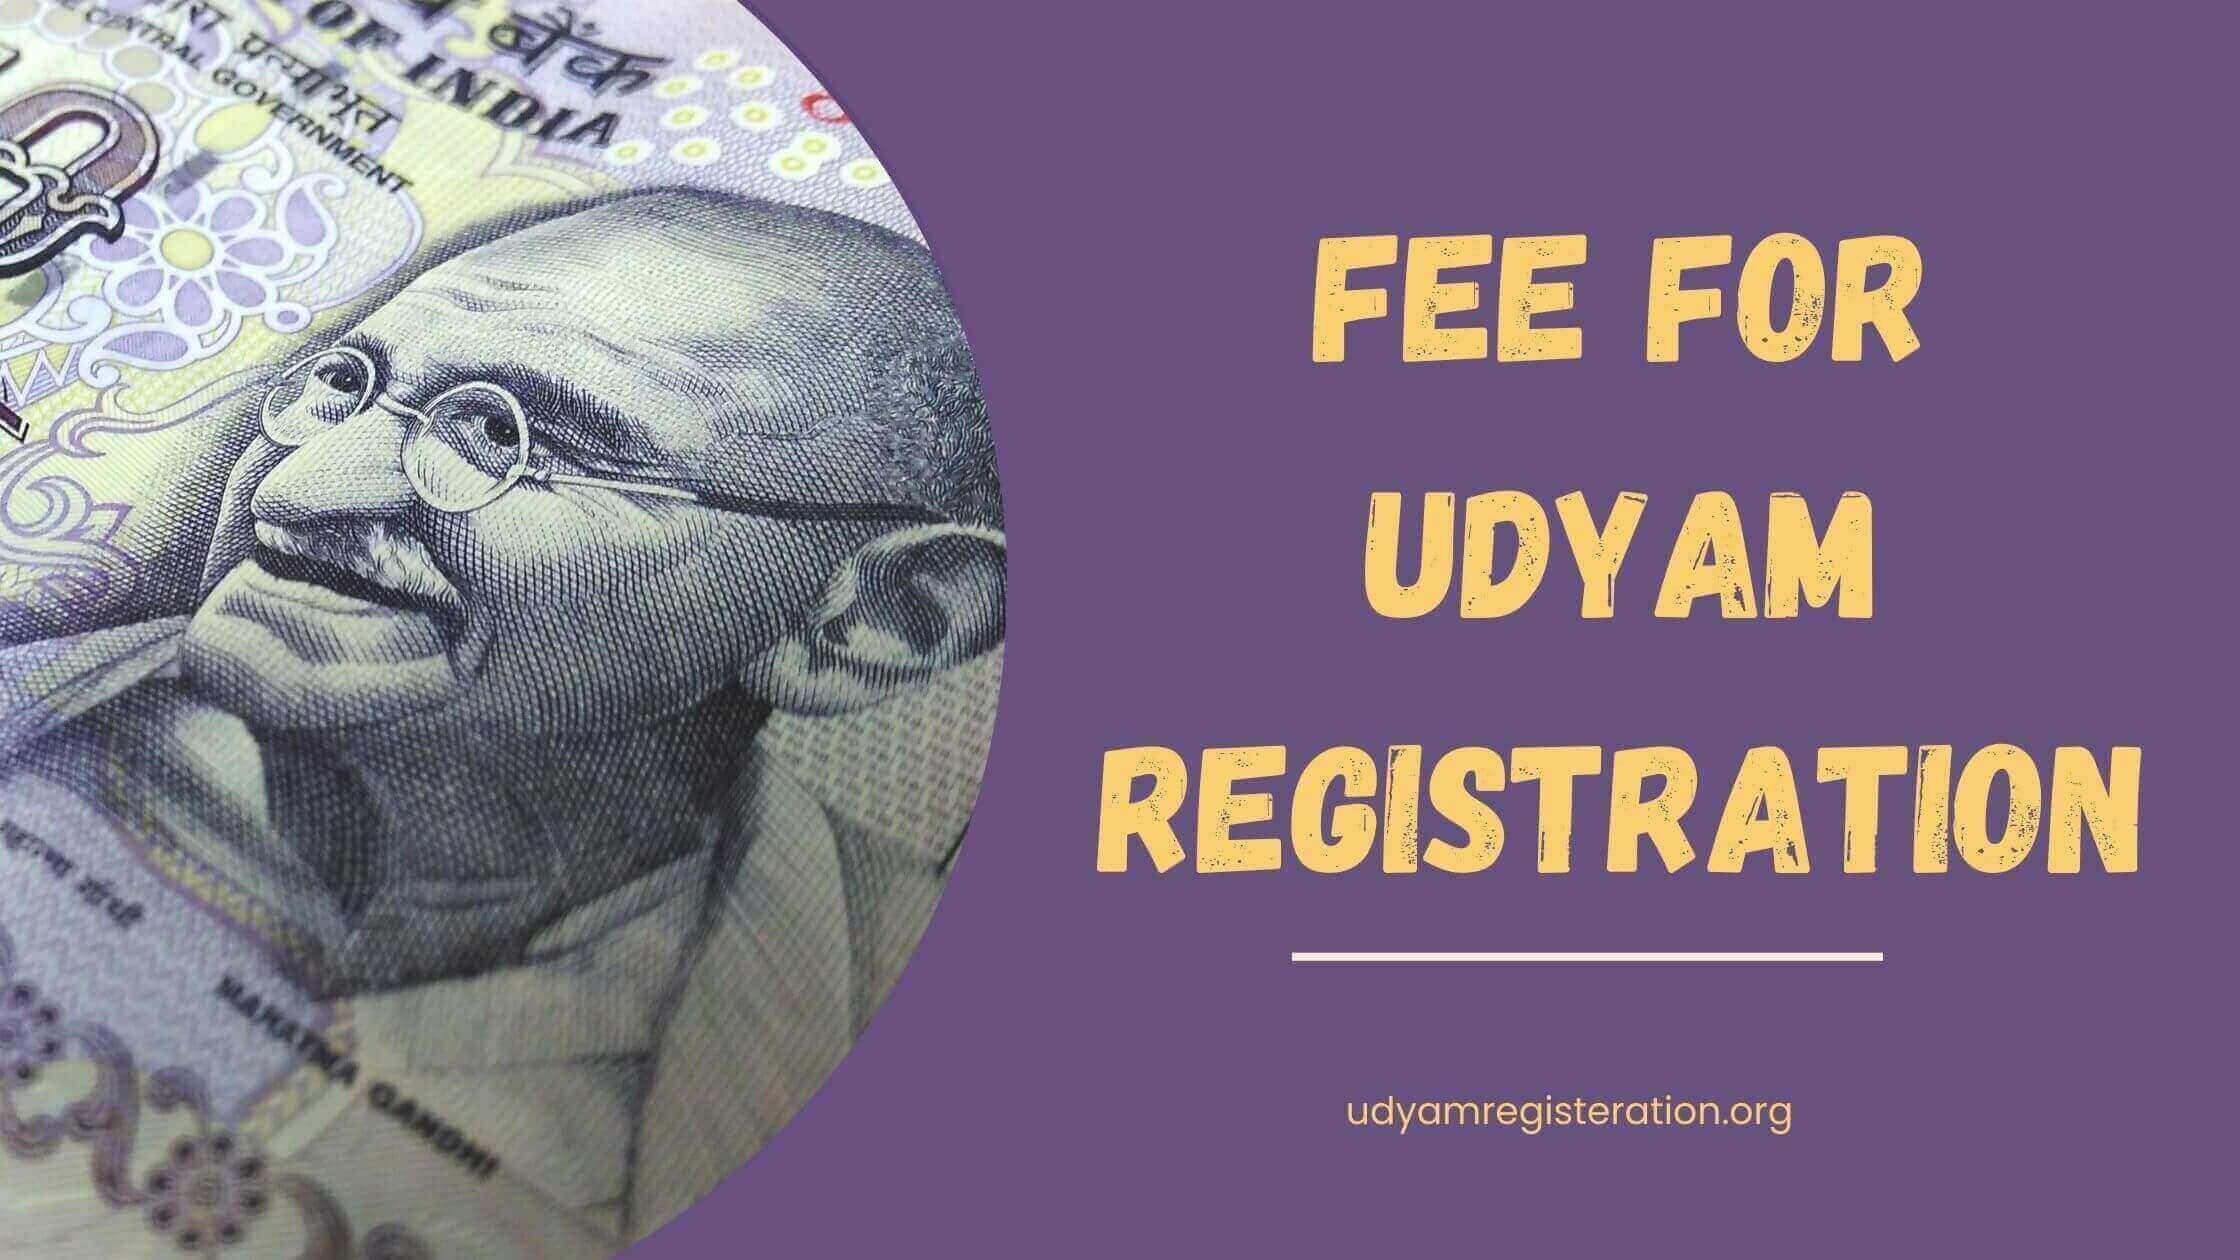 Fee for udyam registration Certificate - MSME